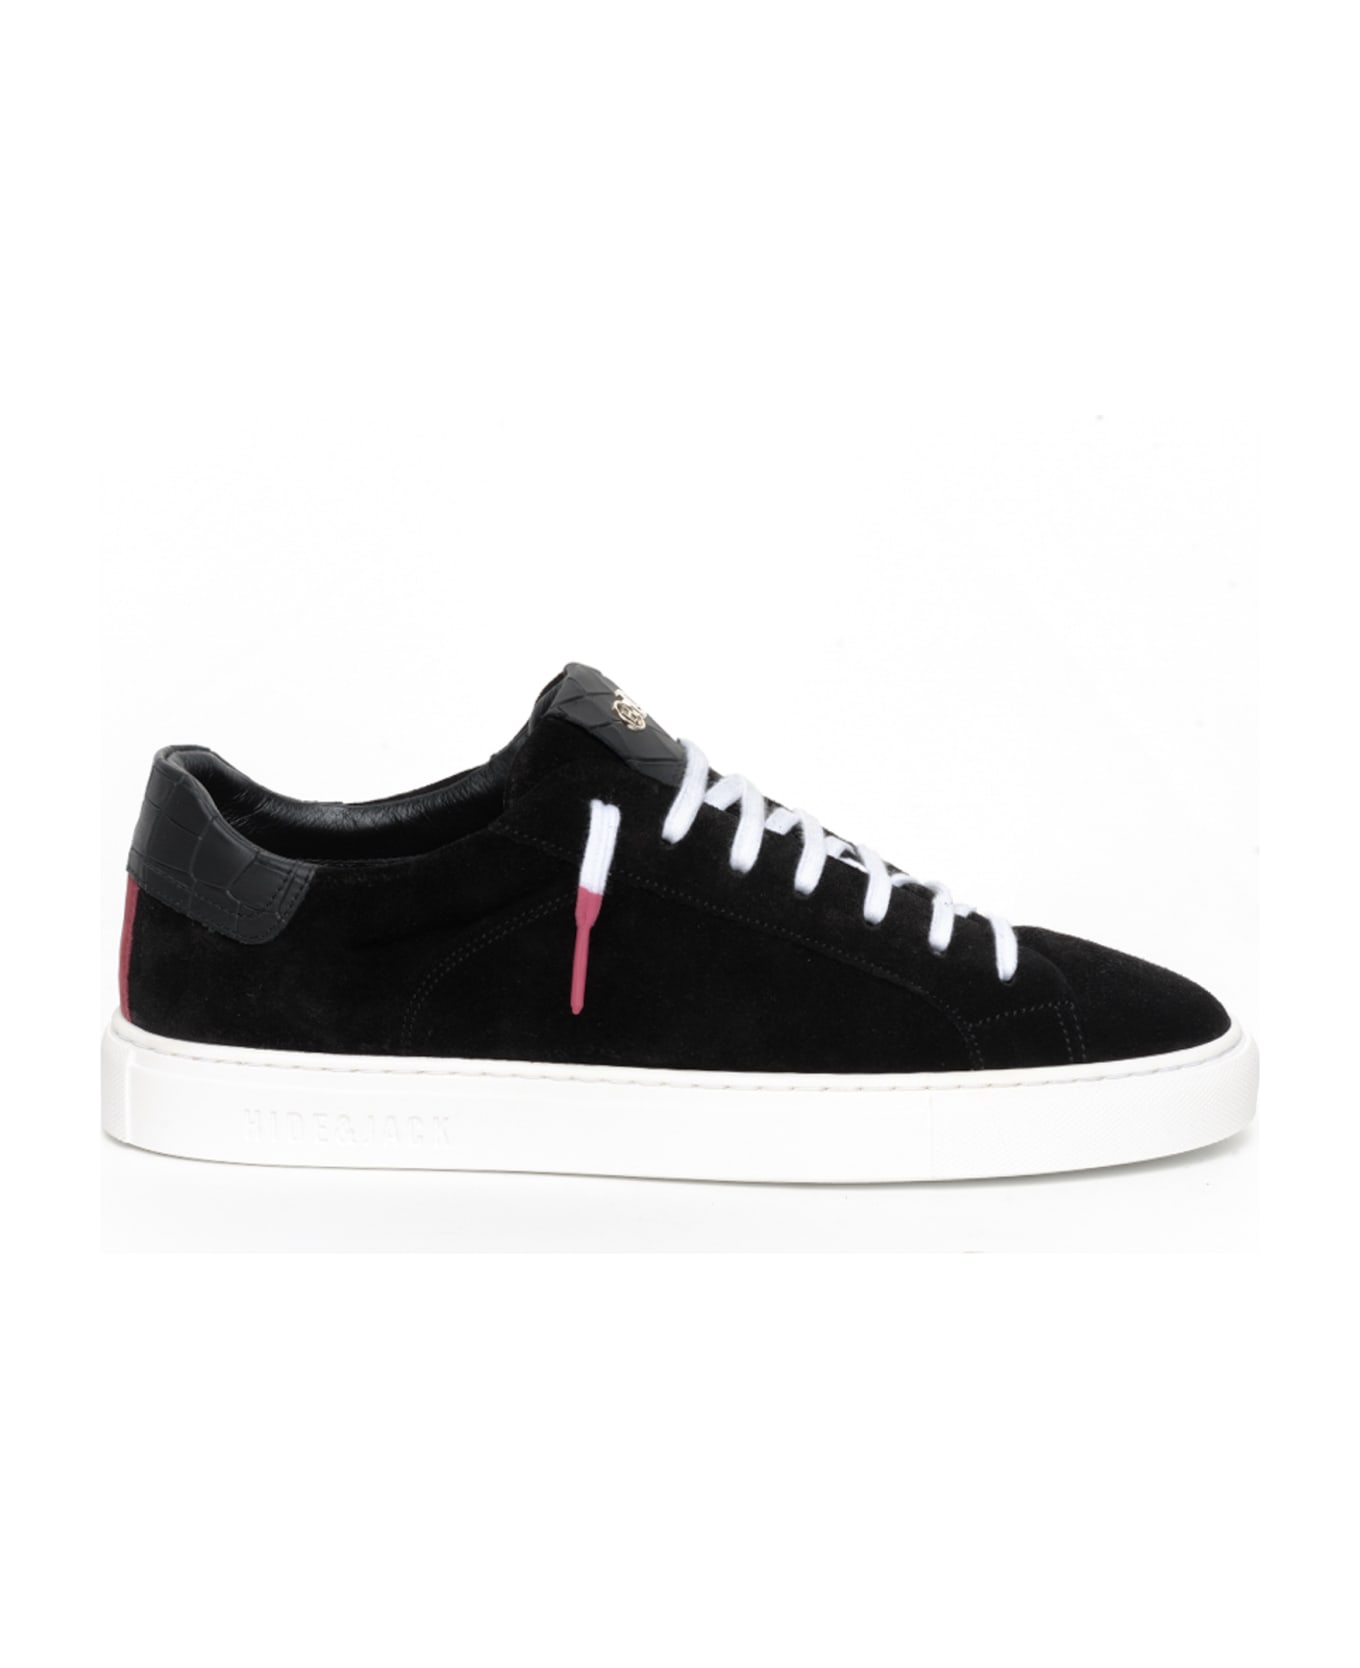 Hide&Jack Low Top Sneaker Essence - Black